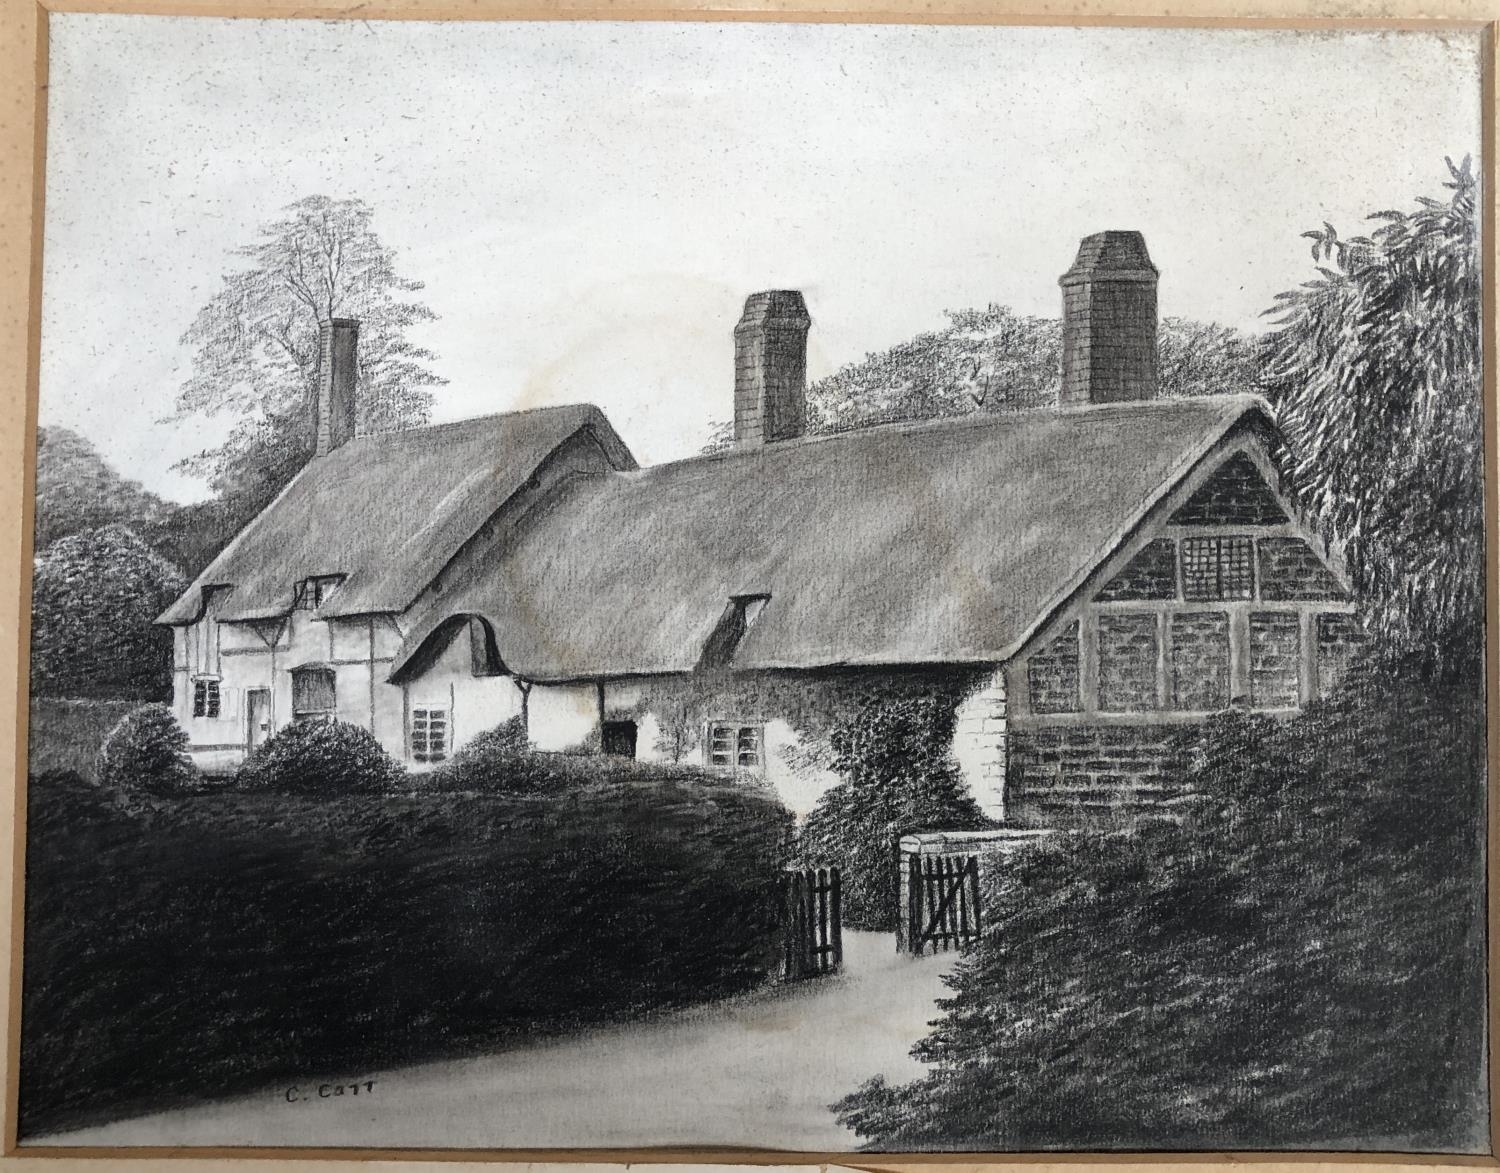 C. Catt, pencil and charcoal study, Ann Hathaways Cottage, Statford-on-Avon', 20x26cm